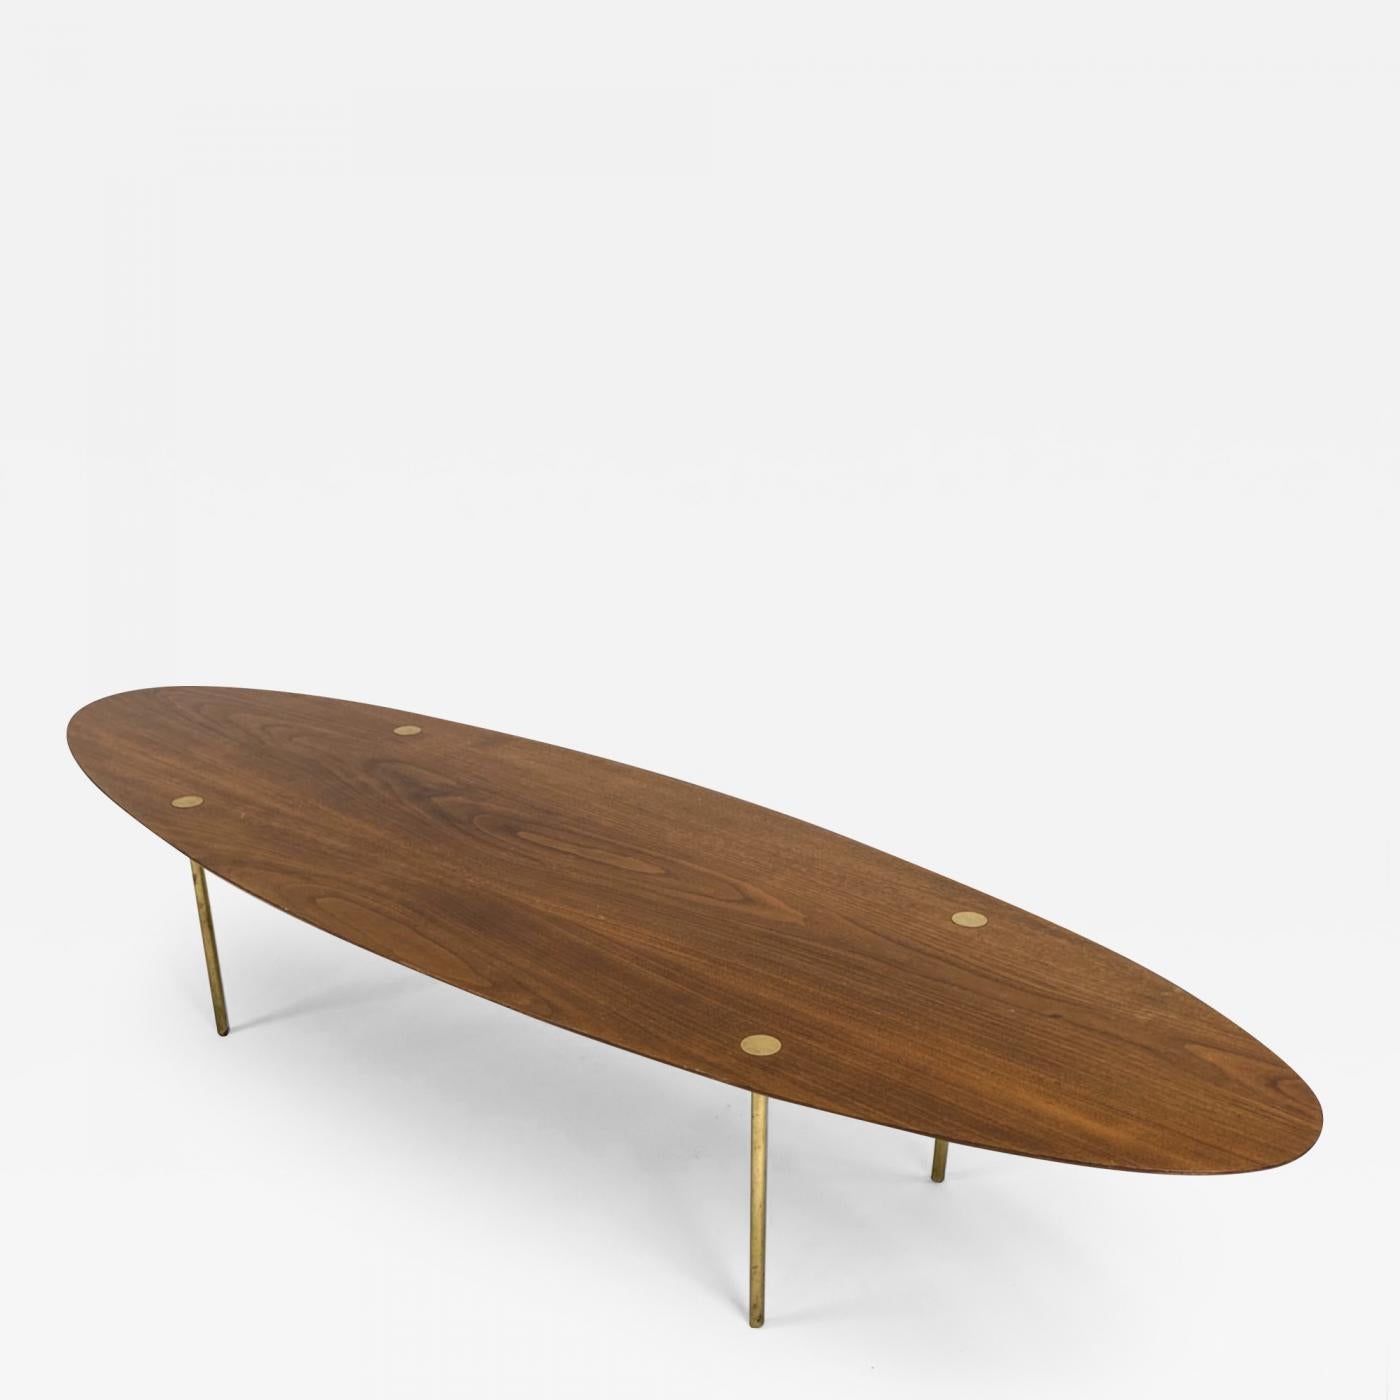 American Walnut and Brass Surfboard coffee table